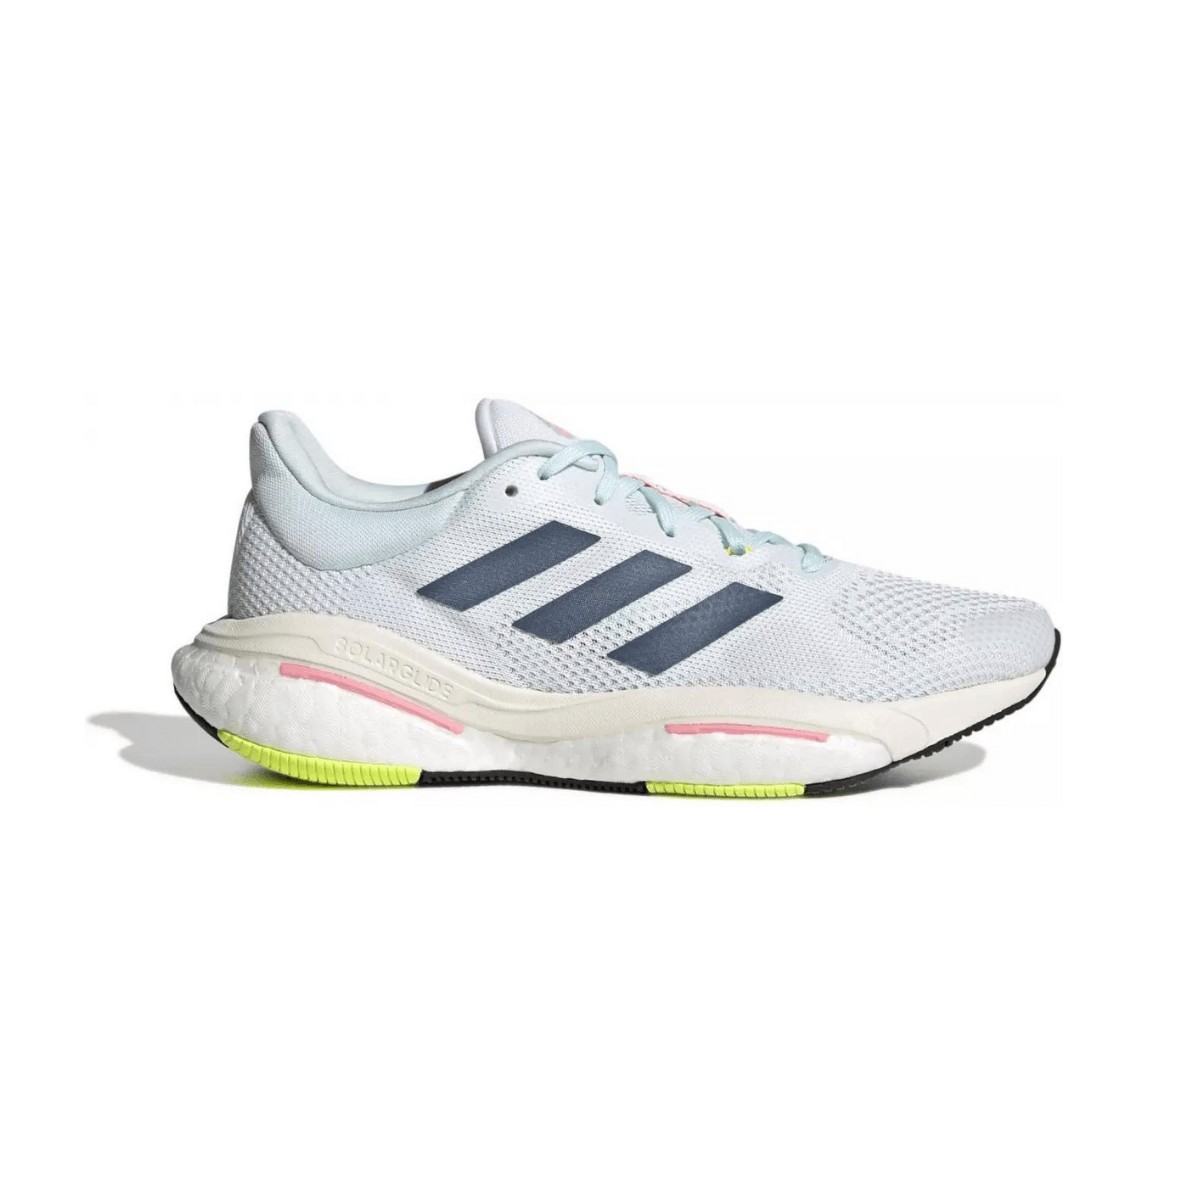 Adidas Solar Glide Women' Shoes Light Blue Pink AW22, Size UK 6.5